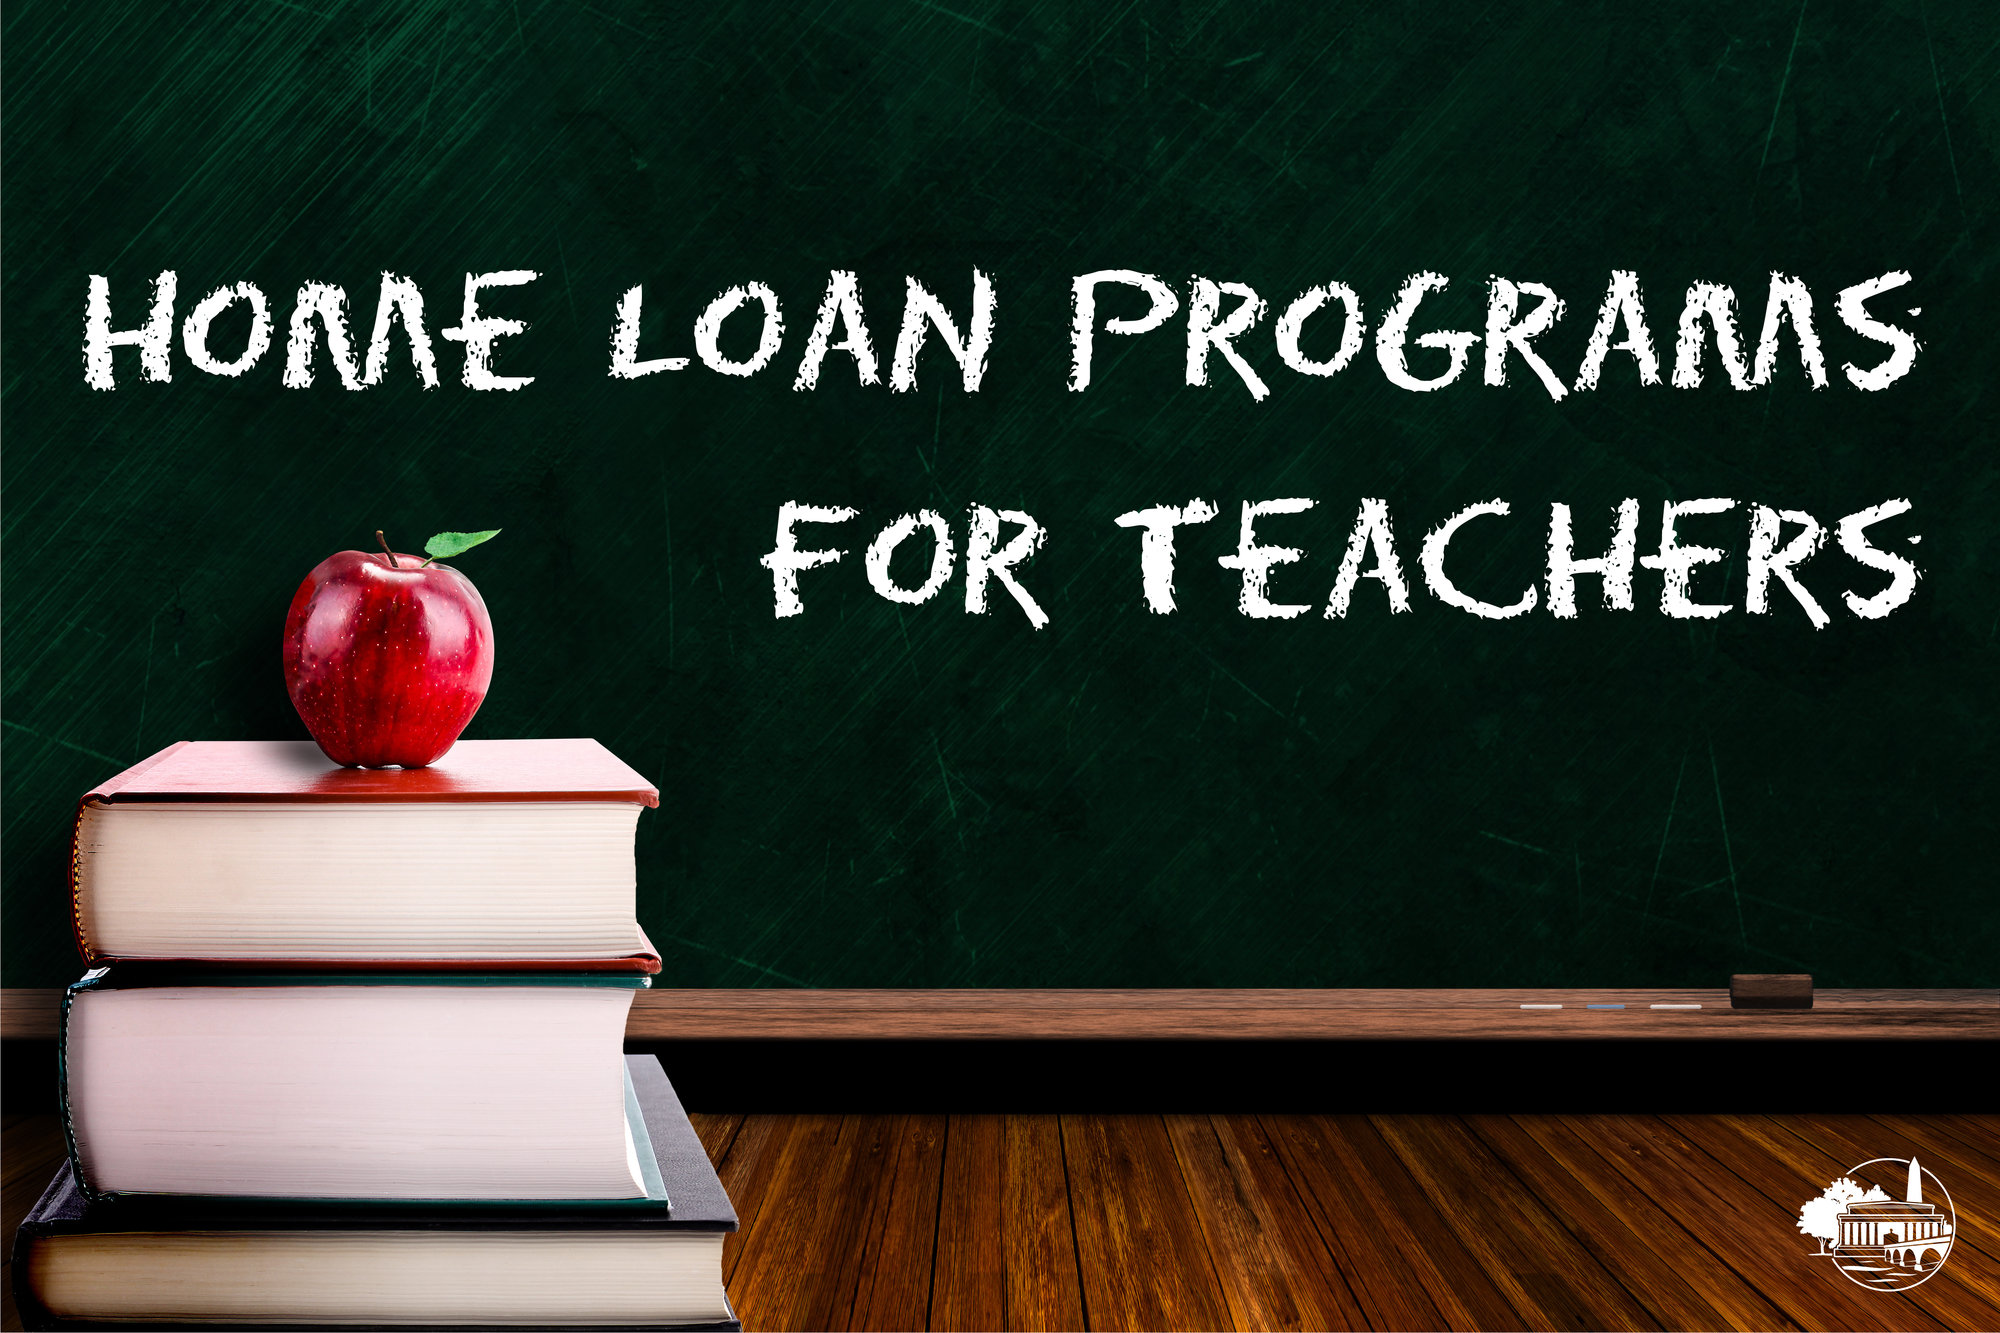 Home Loan Programs for Teachers